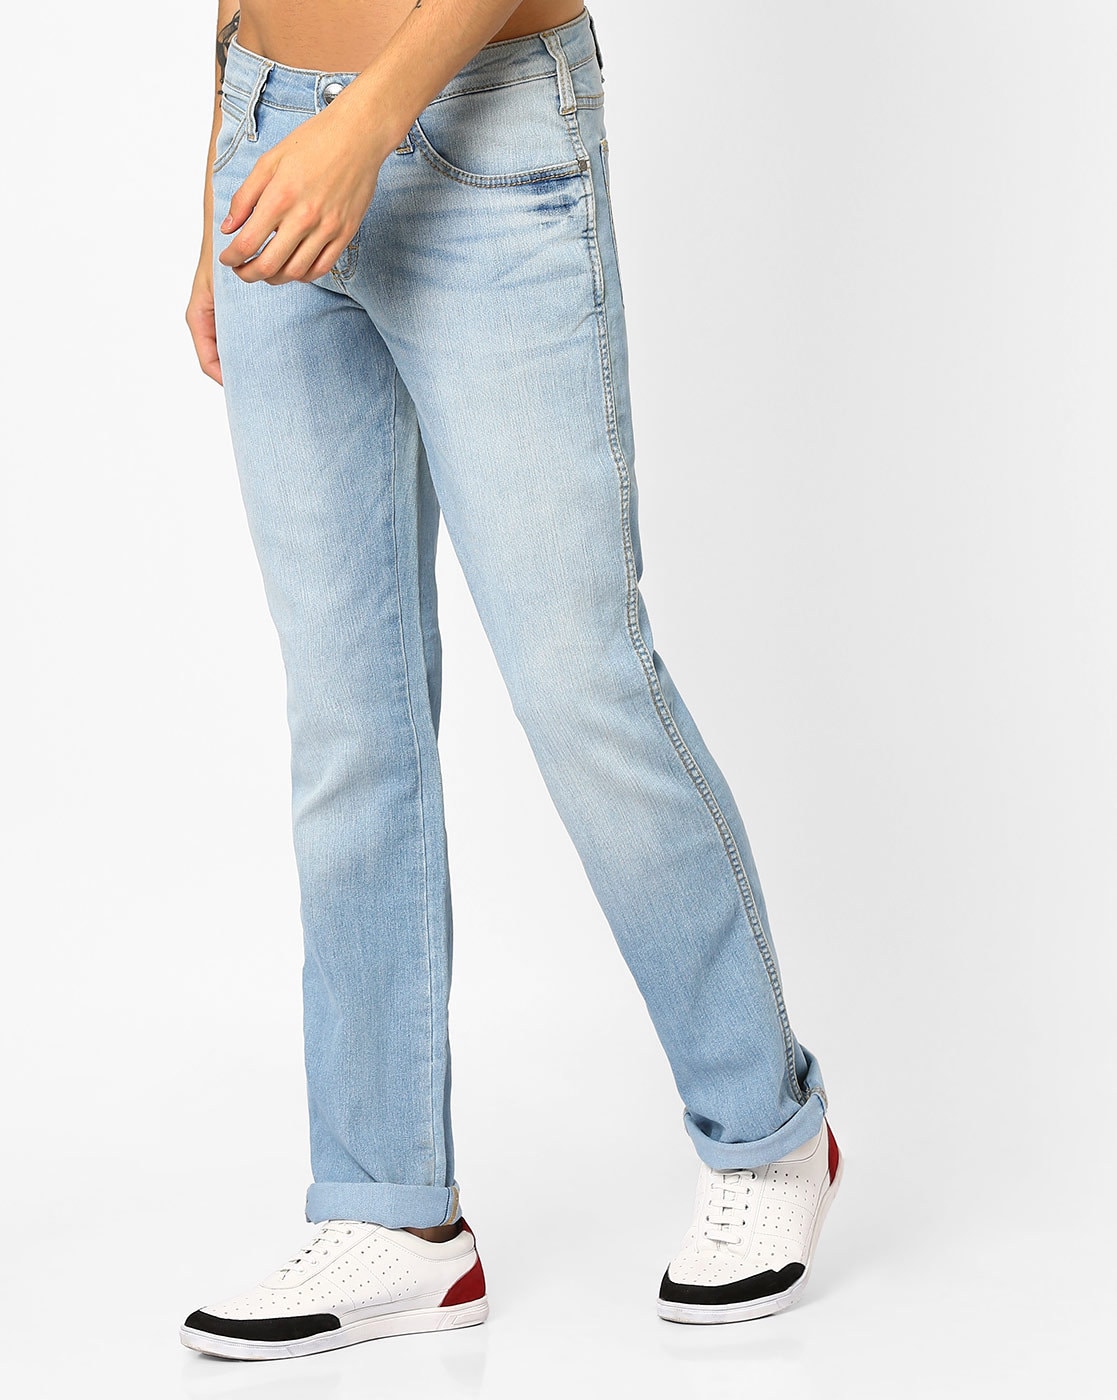 universal thread jeans high rise skinny